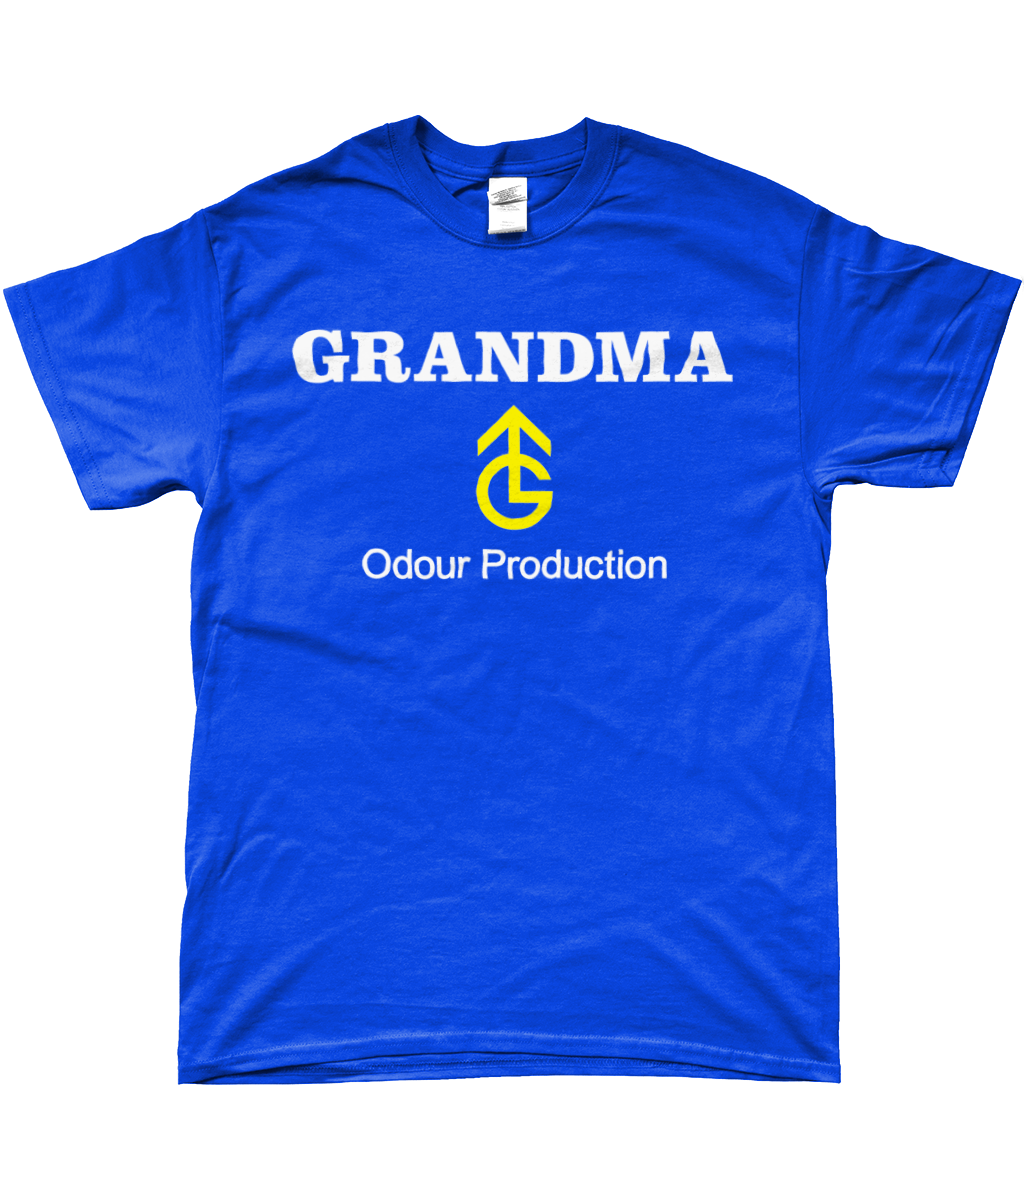 GRANDMA - Odour Production